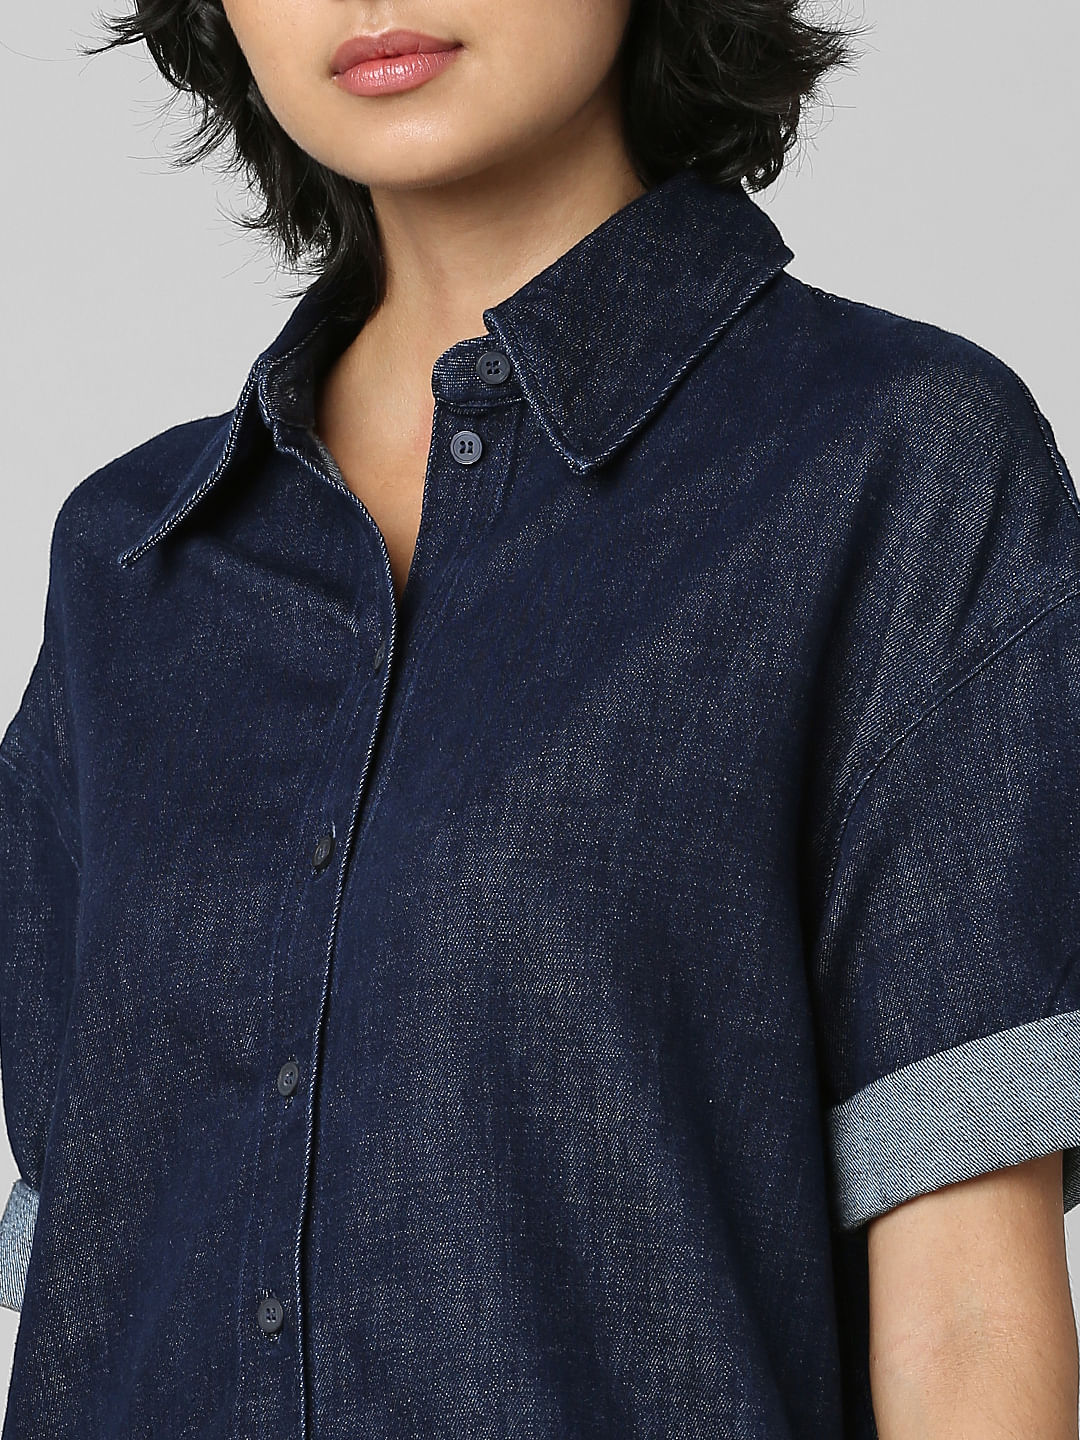 The Untucked Slim Fit Button Up Shirt | Weston Jon Bouchér